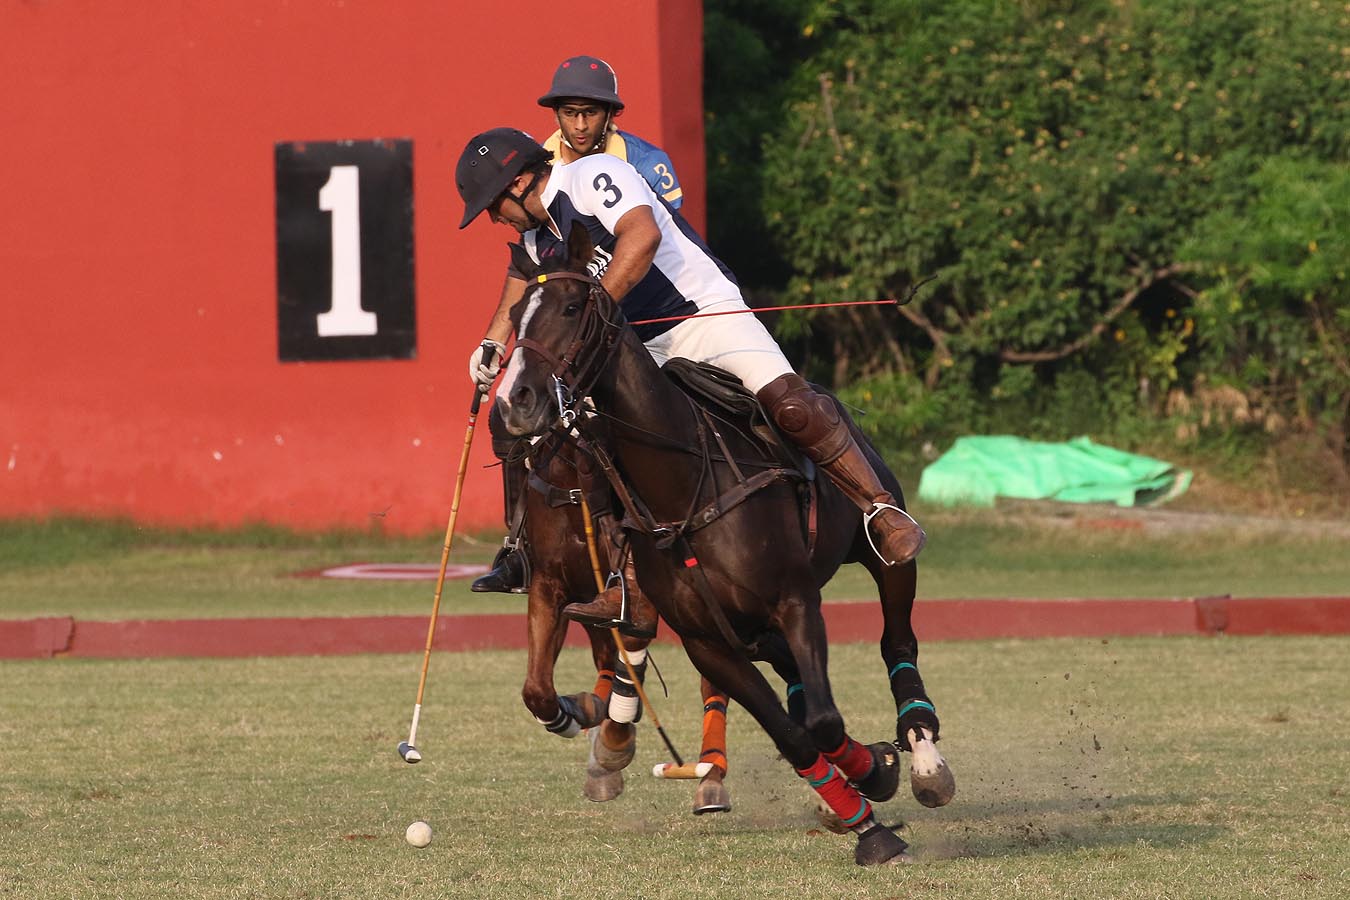 Jaipur Polo Season 2019